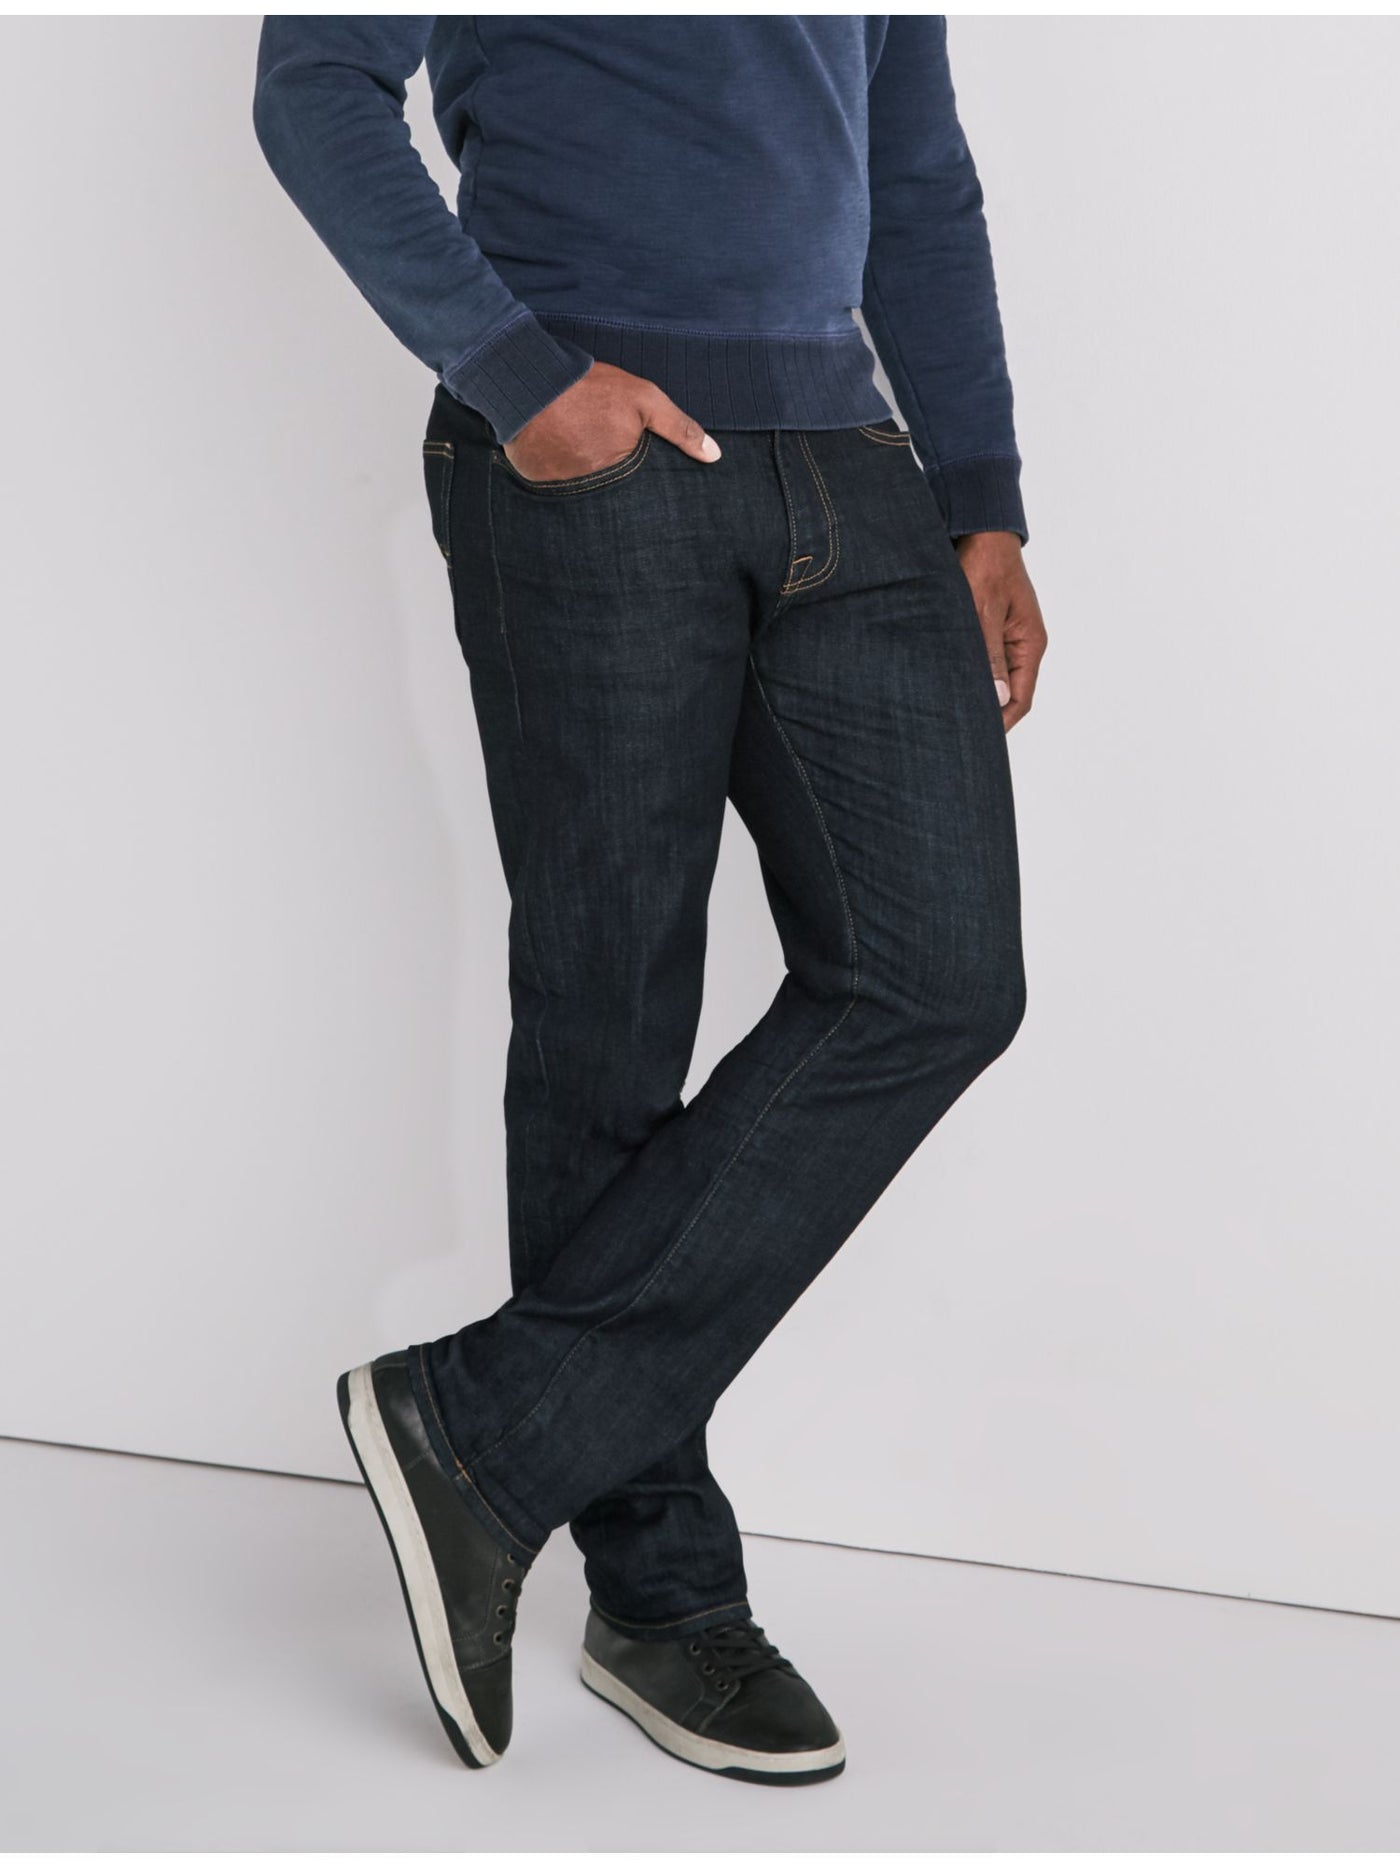 LUCKY BRAND Mens Blue Slim Fit Denim Jeans W40/ L32